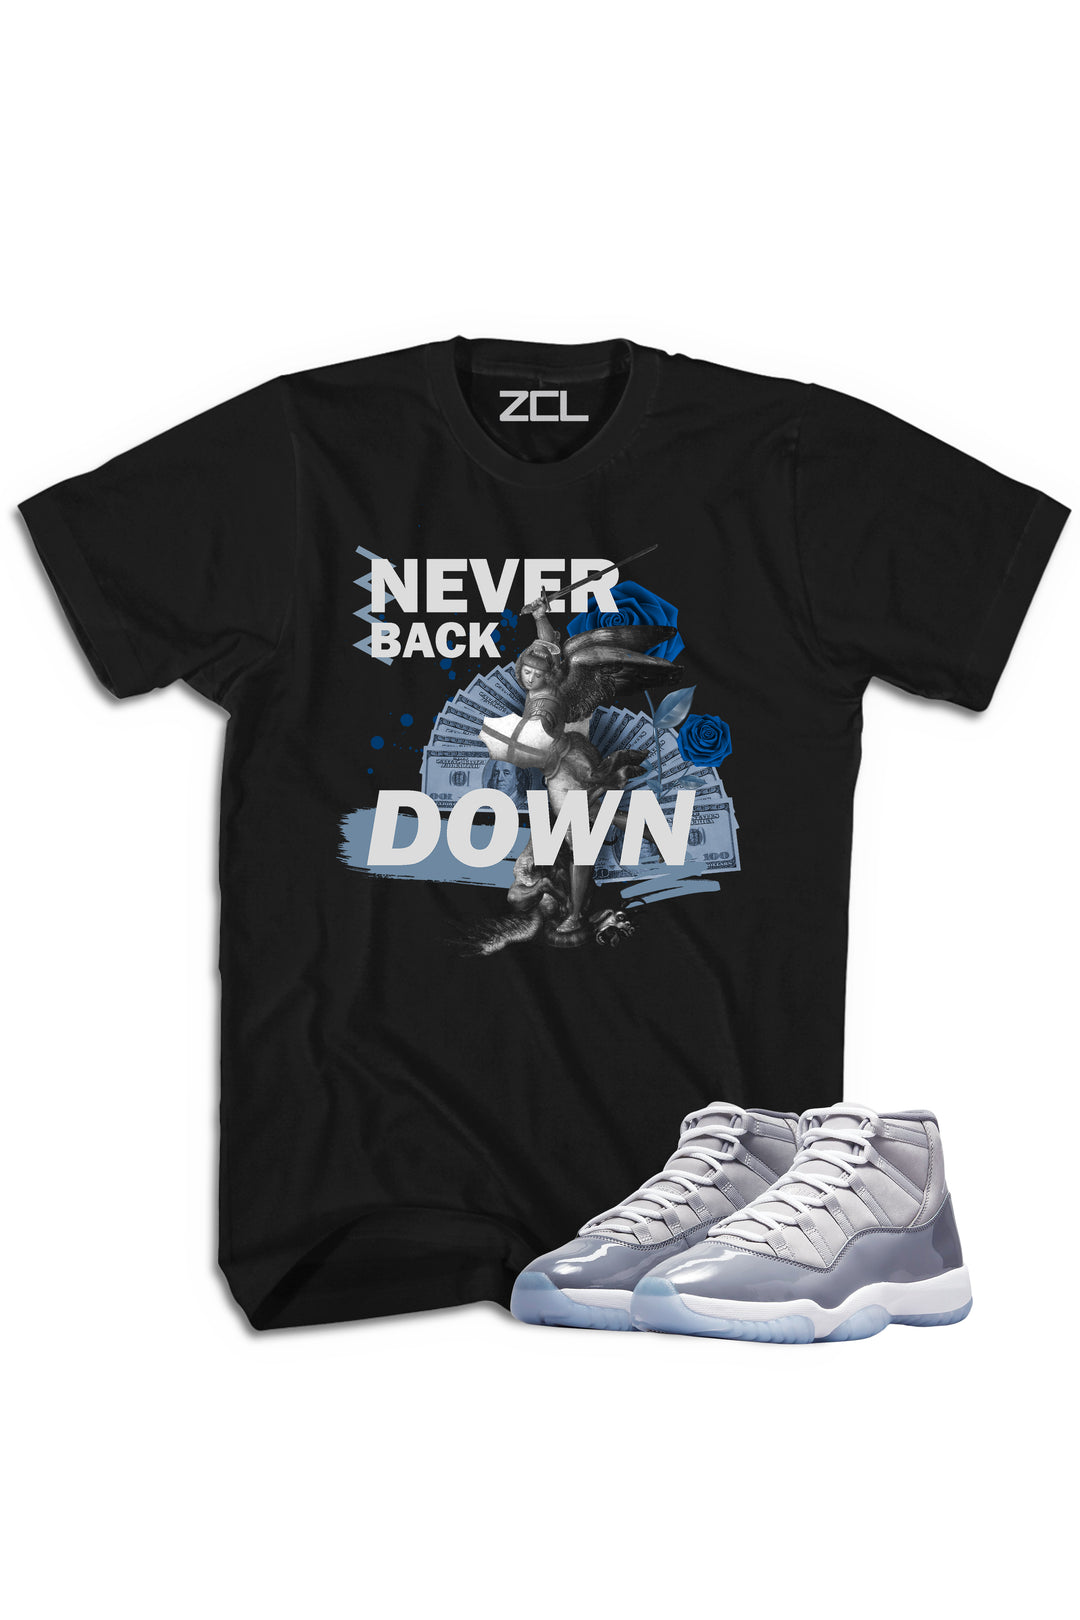 Air Jordan 11 "Never Back Down" Tee Cool Grey - Zamage